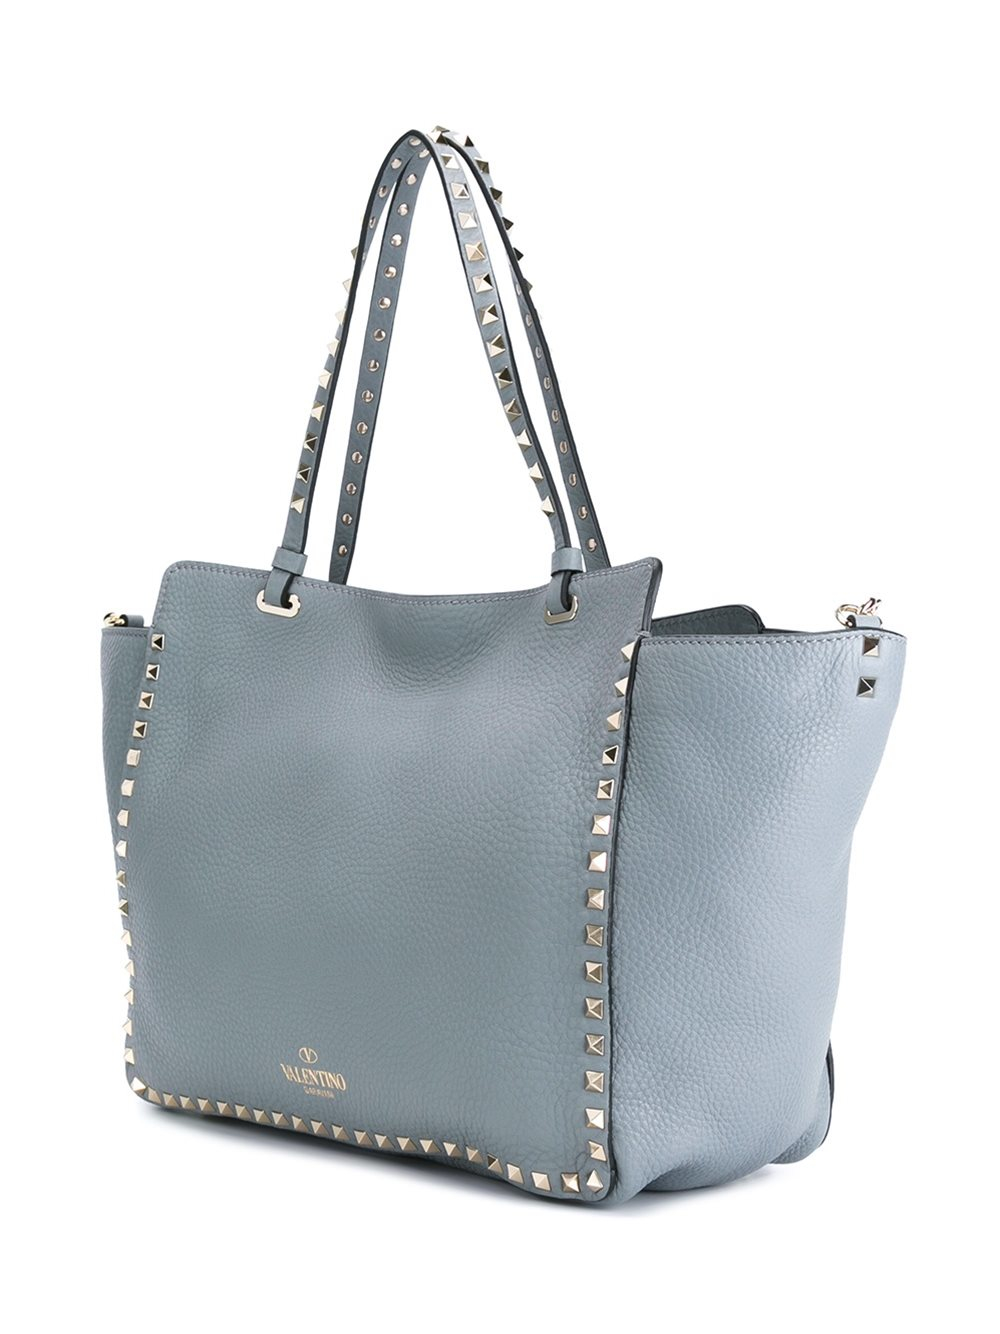 Valentino Rockstud Medium Tote Bag in Blue | Lyst